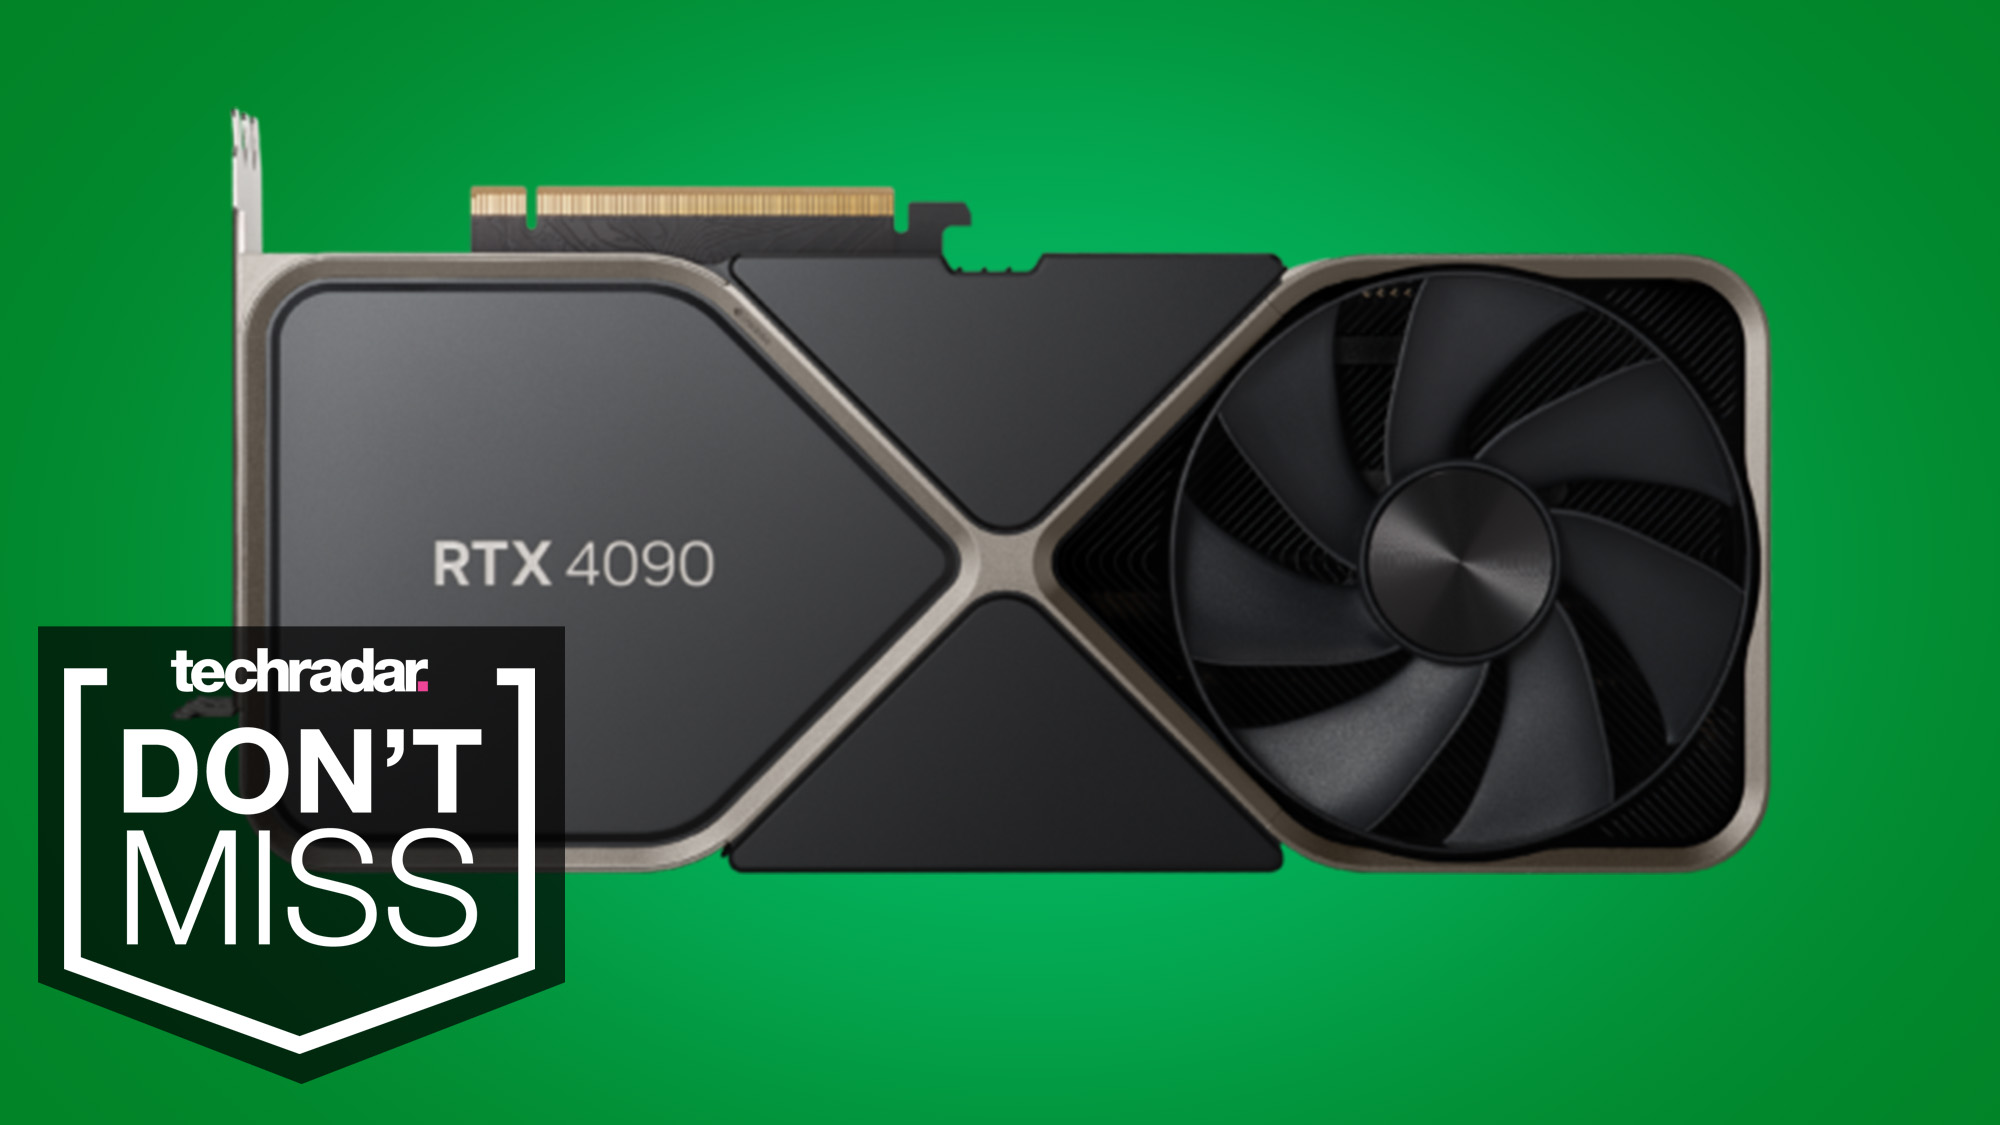 Nvidia RTX 4090 sur fond vert